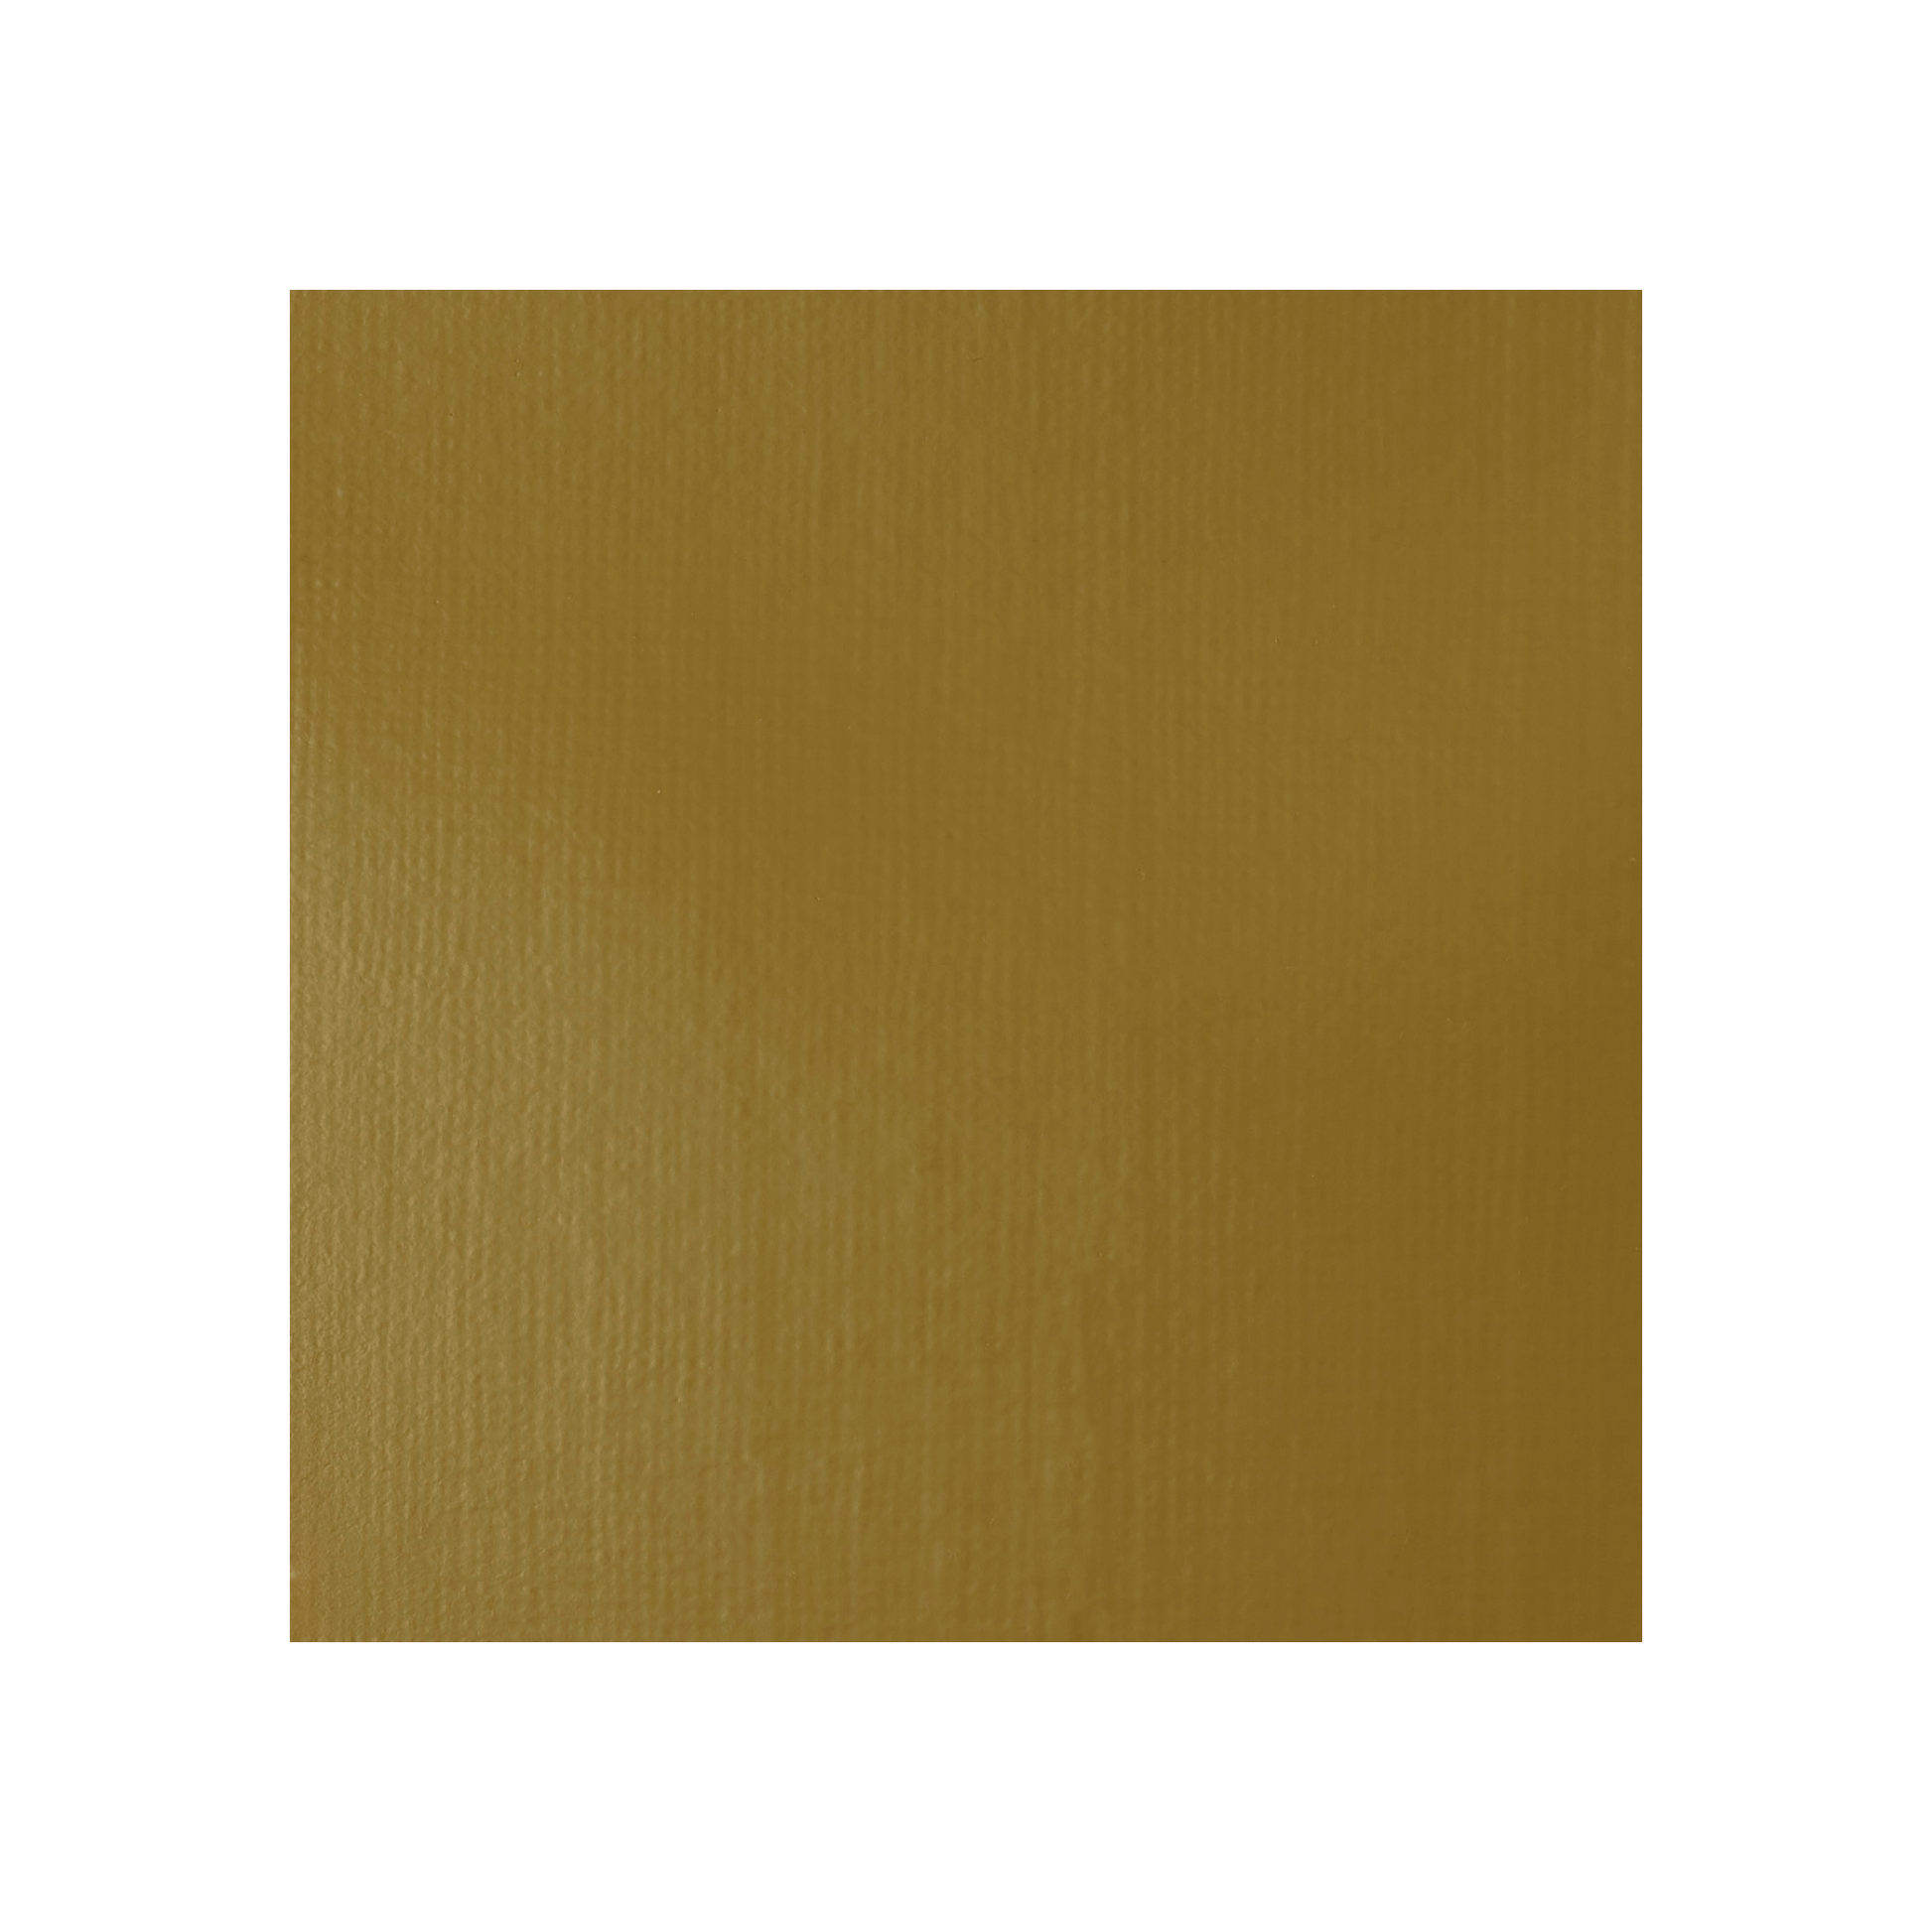 Bronze yellow colour swatch for Liquitex Professional Heavy Body Acrylic